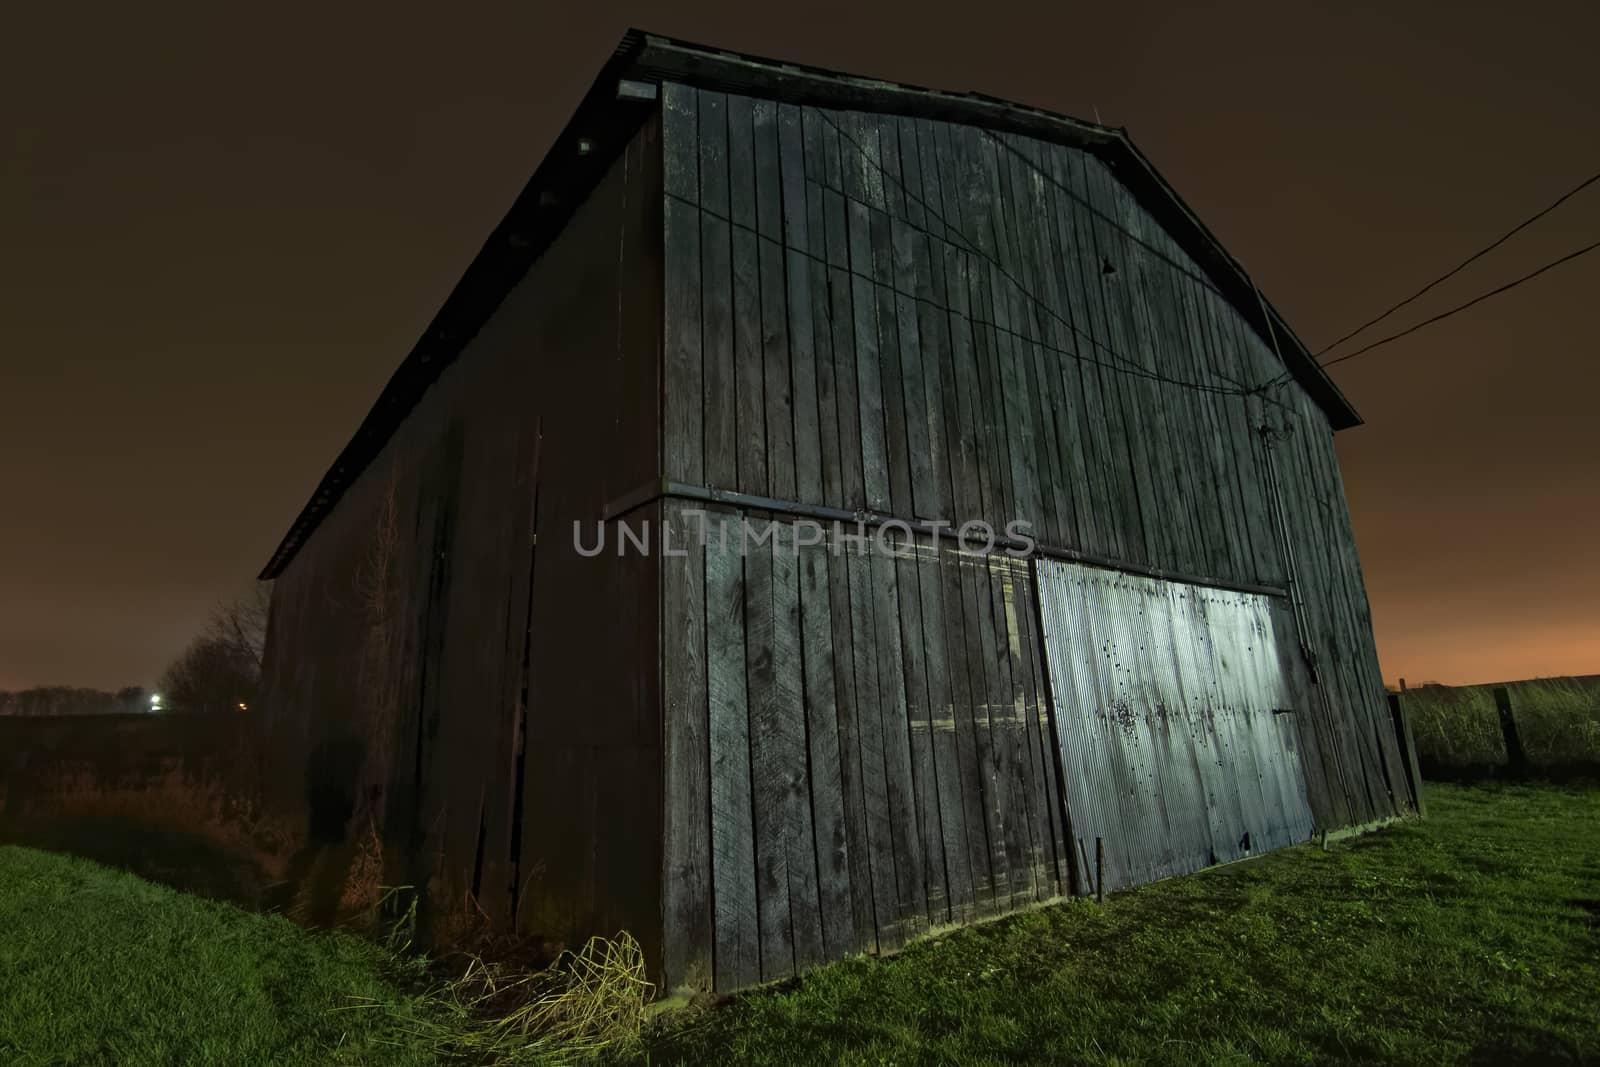 A barn in Kentucky at nighttime.